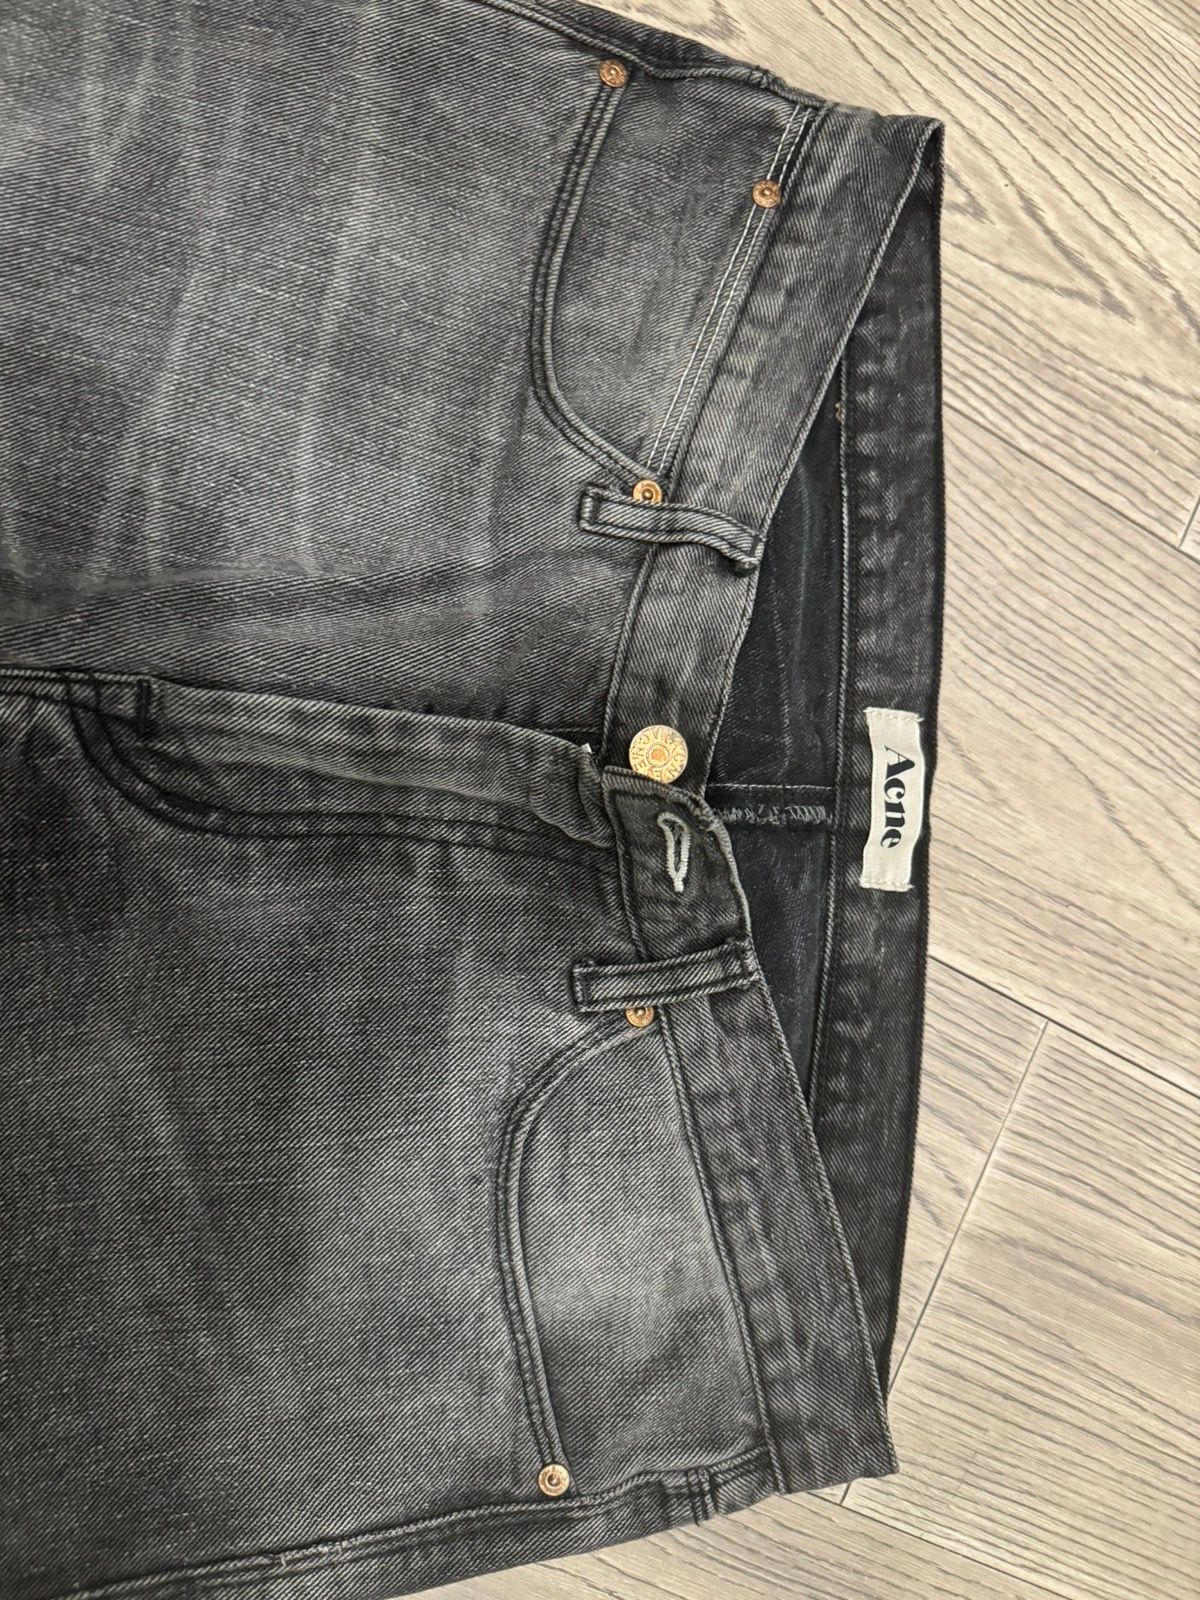 Acne Studios Acne studio jeans Size US 32 / EU 48 - 3 Thumbnail